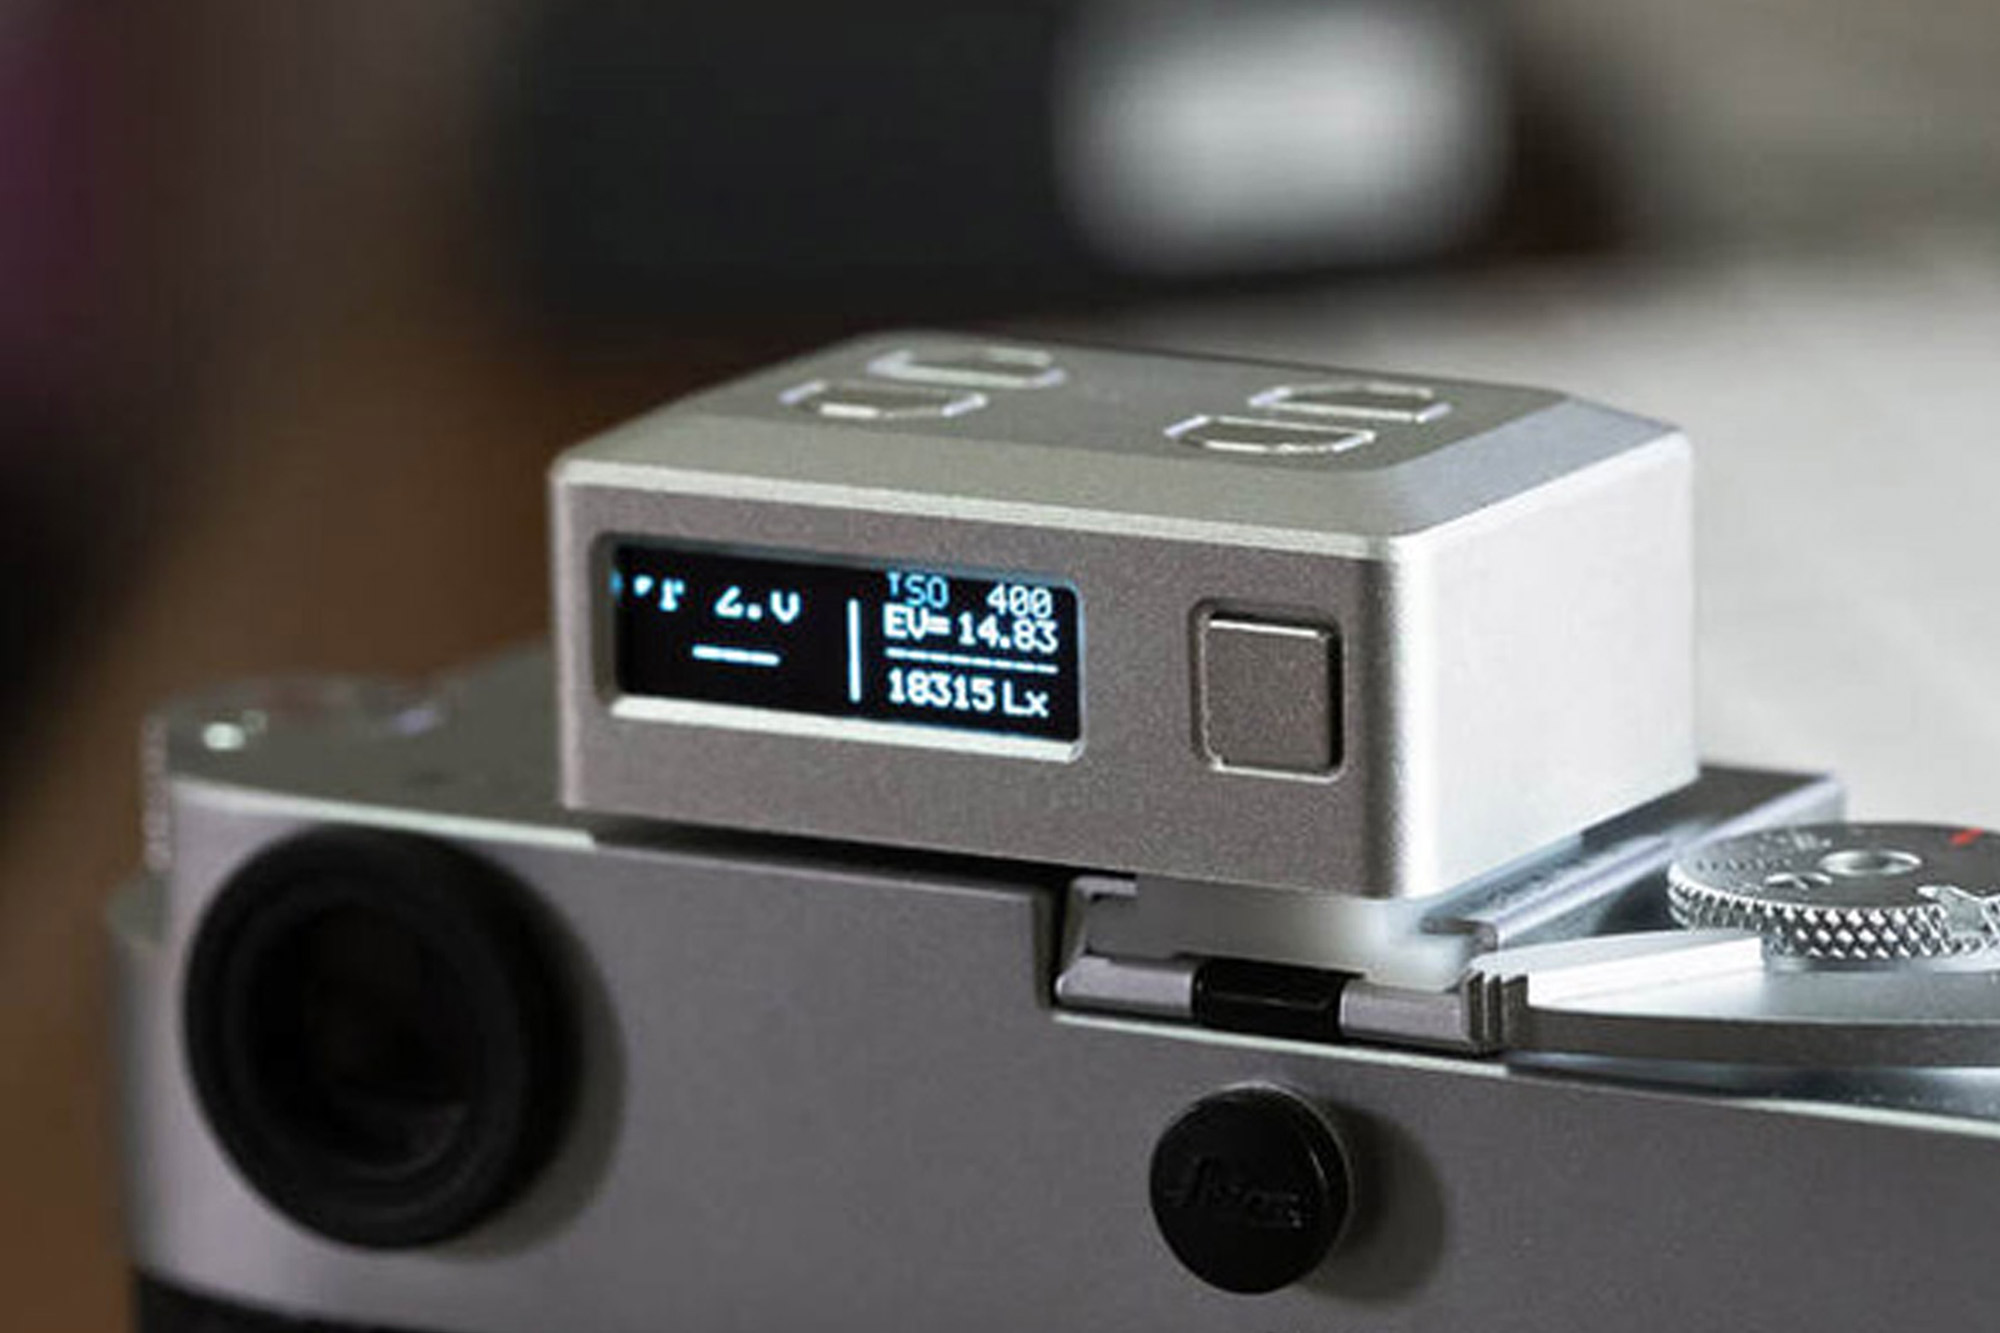 3i、カメラのホットシューに取り付け可能なデジタル露出計 KEKS EM01を 